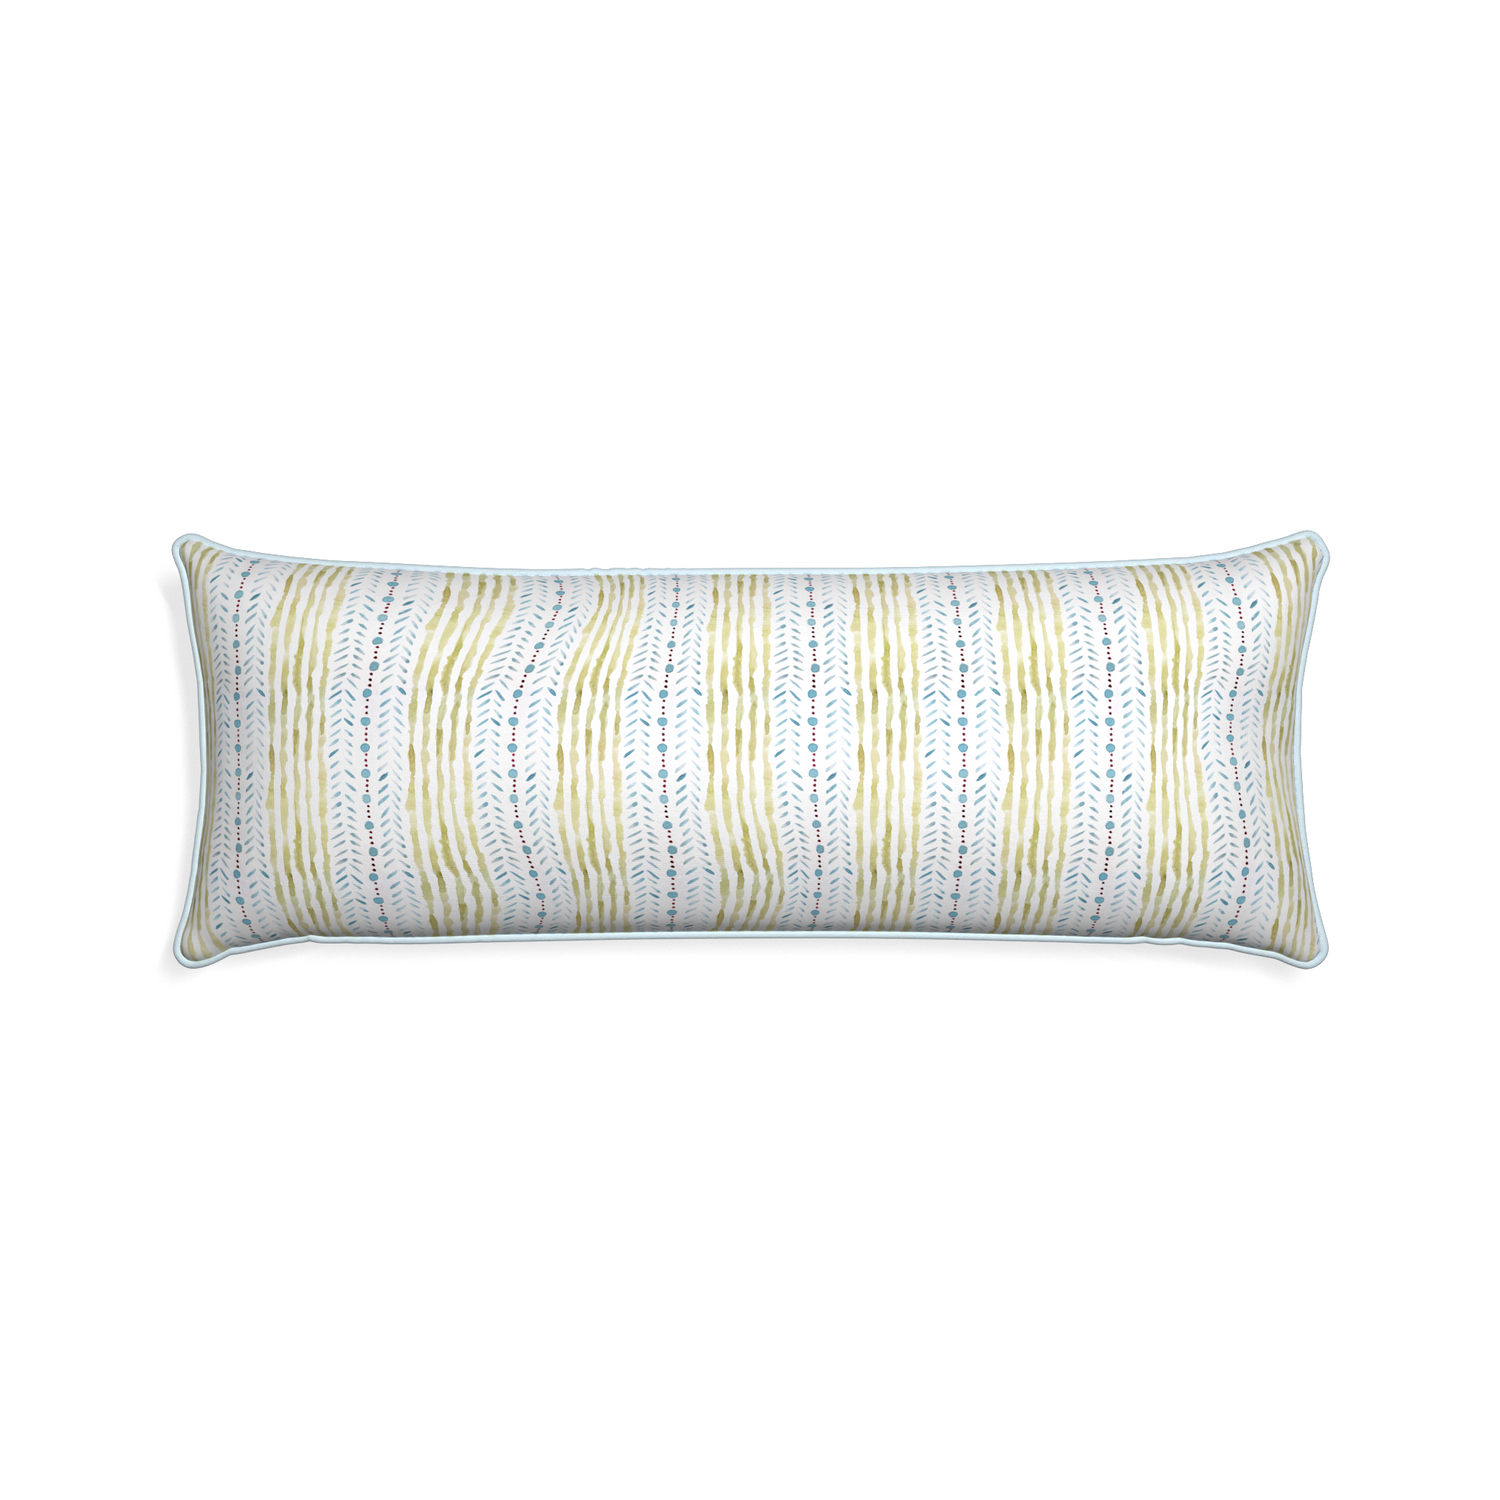 Xl-lumbar julia custom pillow with powder piping on white background